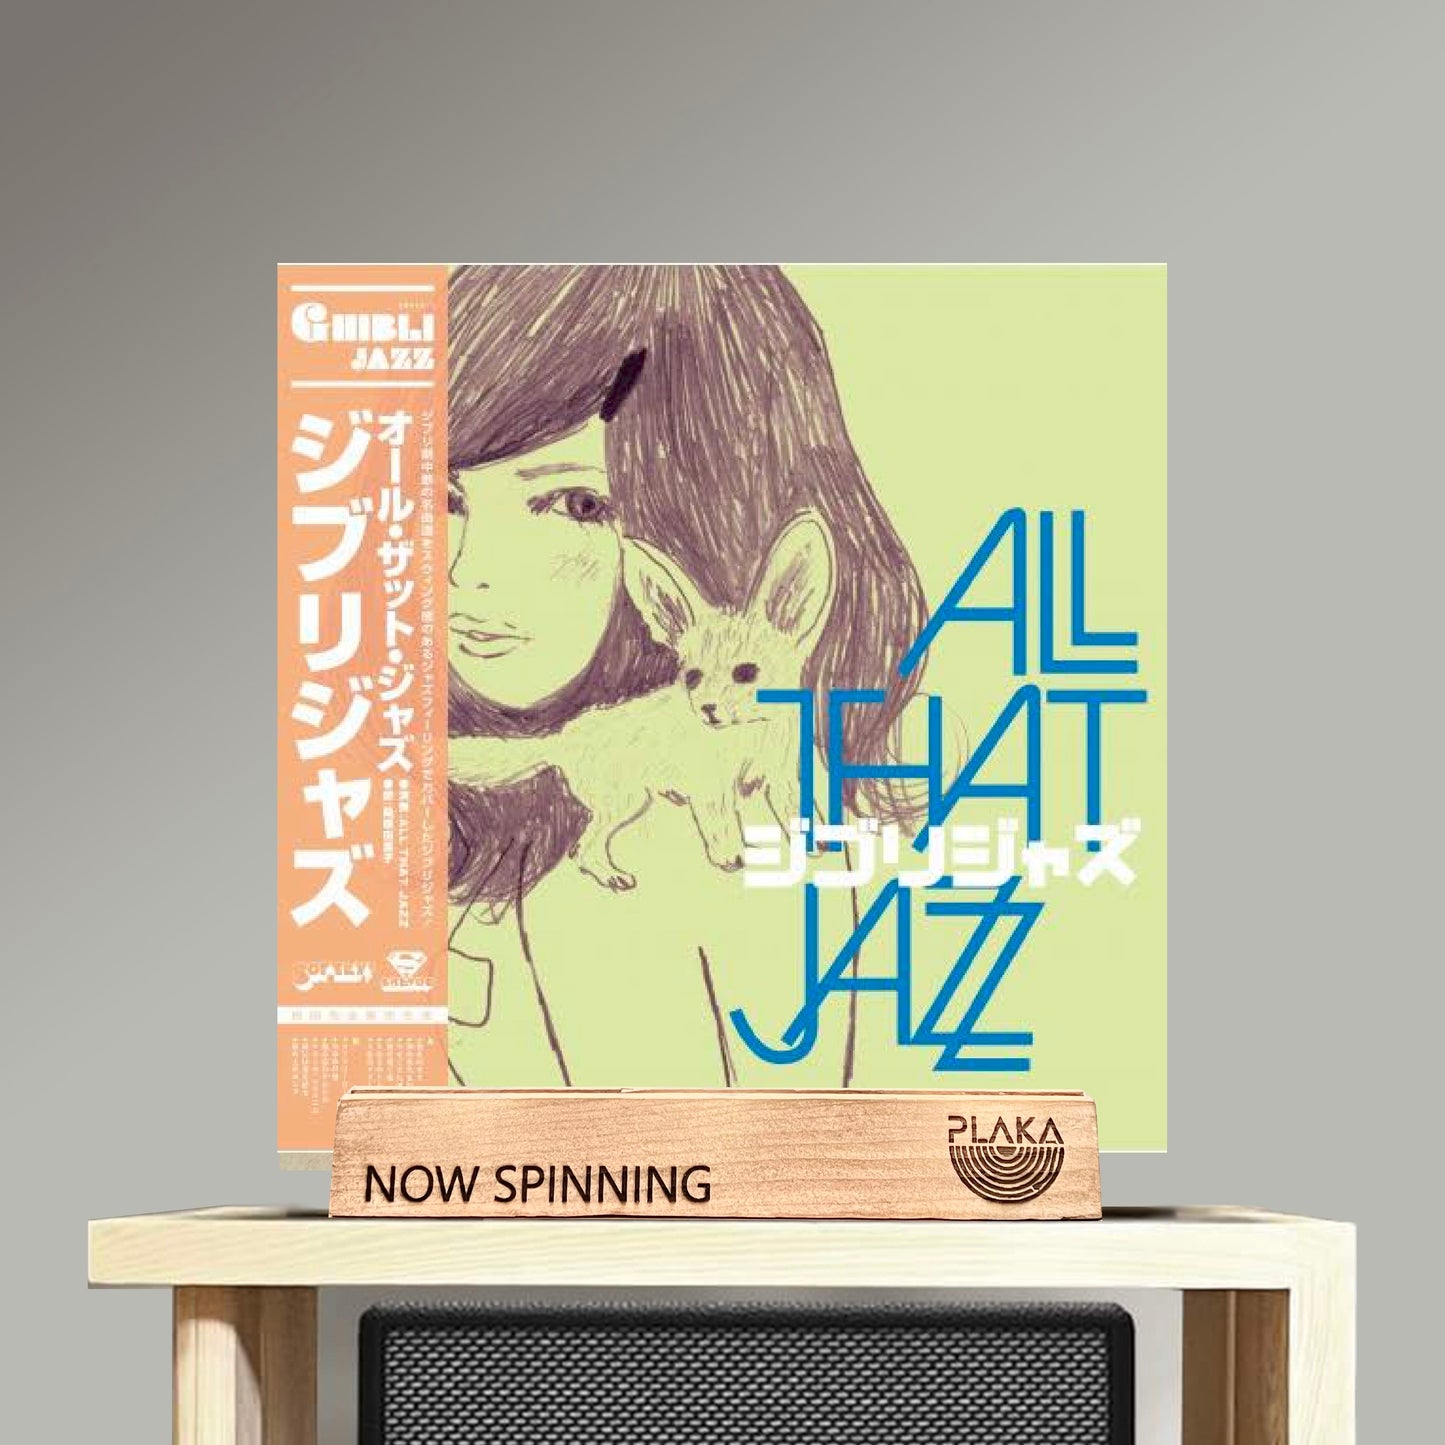 All That Jazz feat. Cosmic Home - Ghibli Jazz Vol. 1